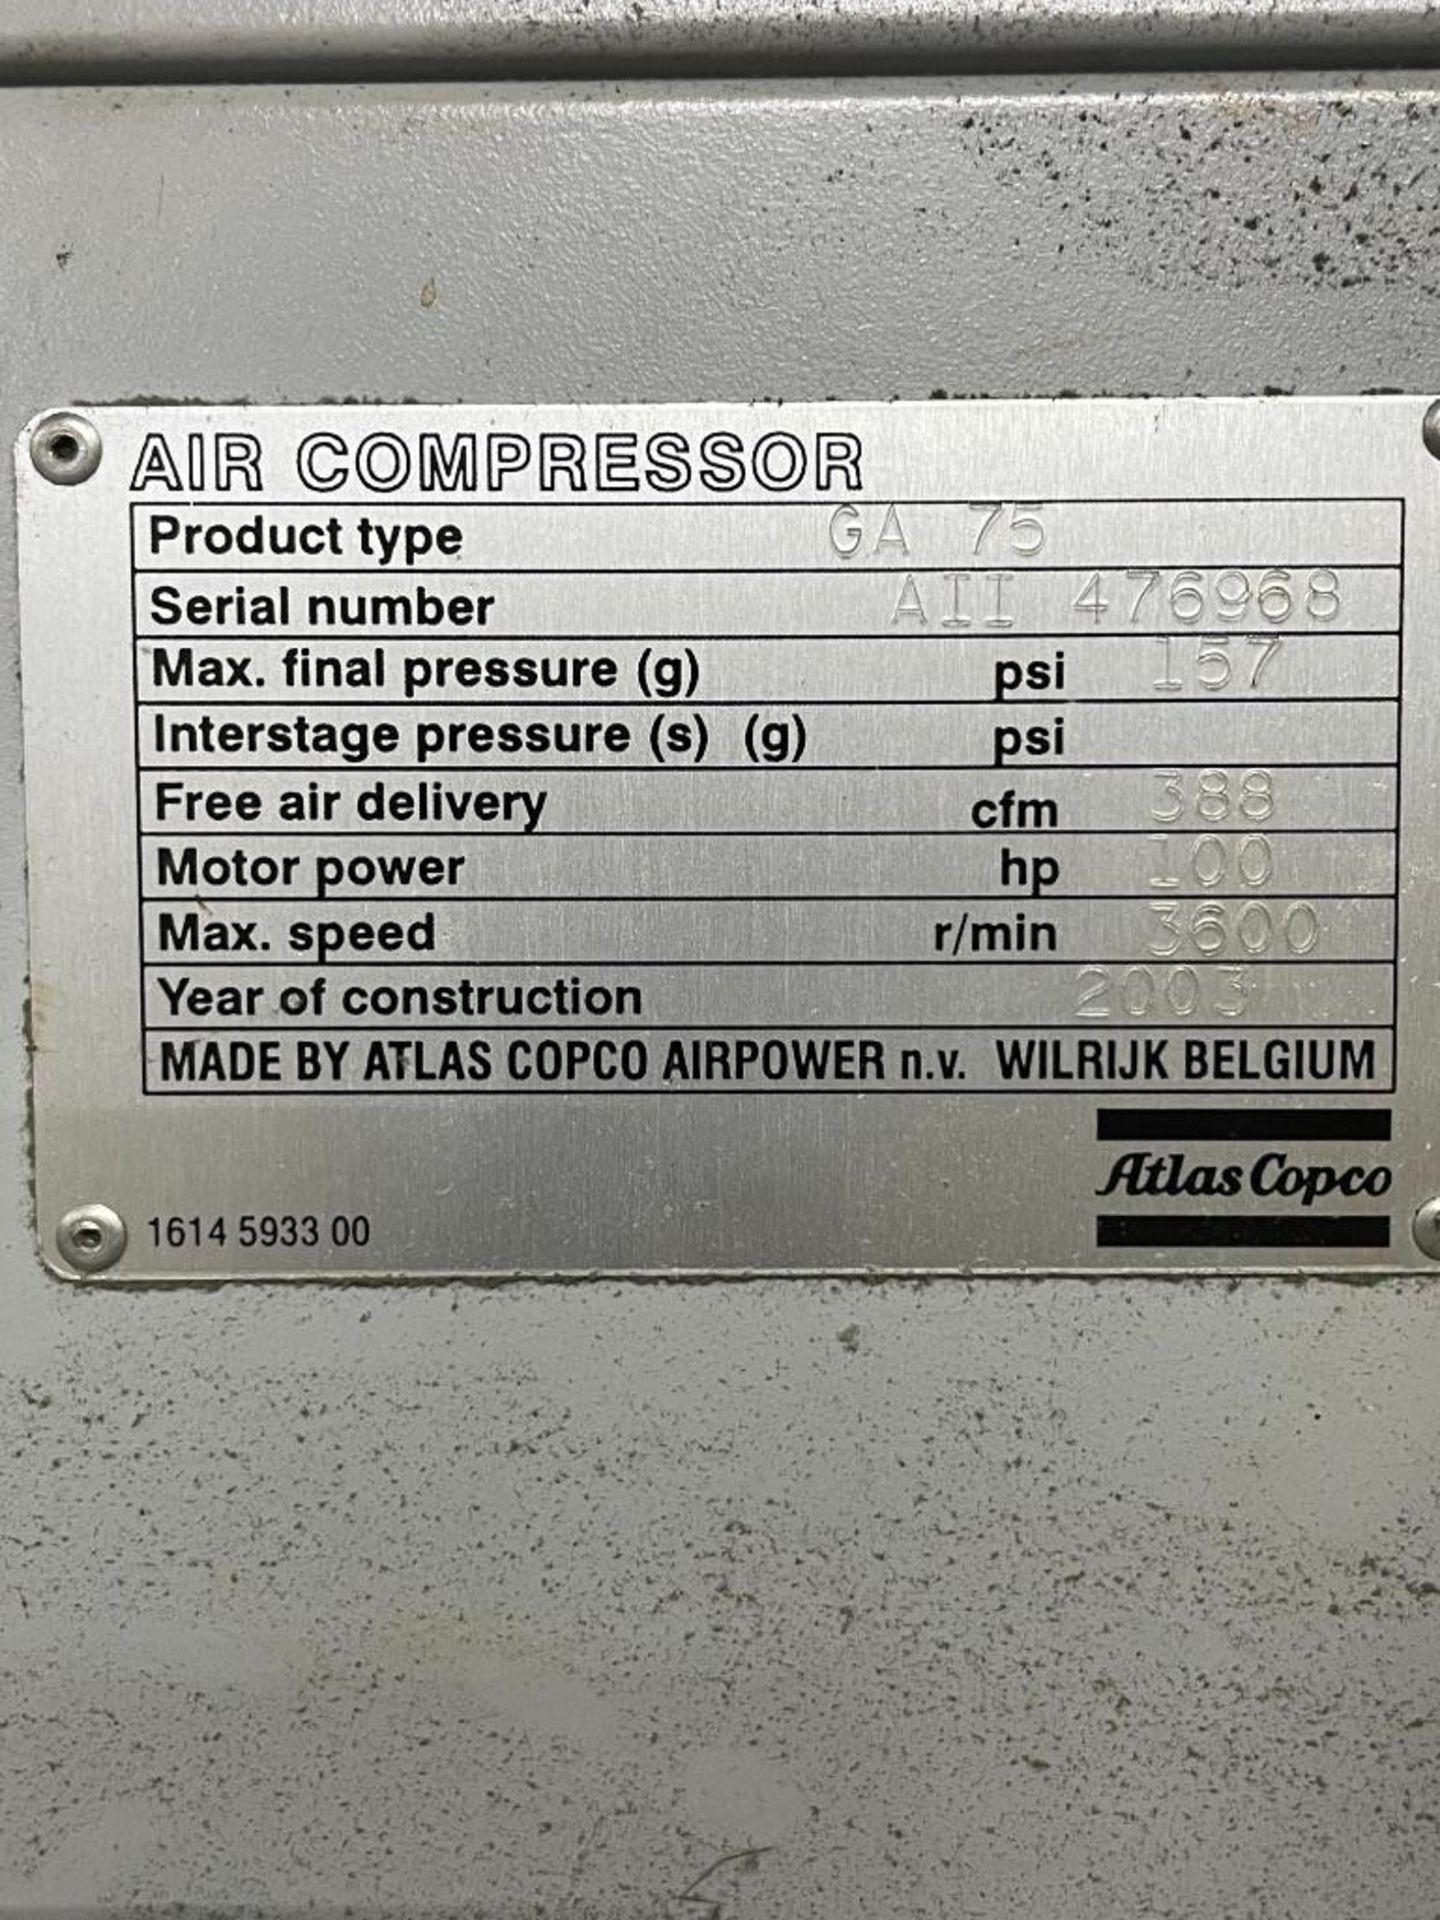 Atlas Copco GA 75 Air Compressor, s/n AII 476968, New 2003 - Image 6 of 6